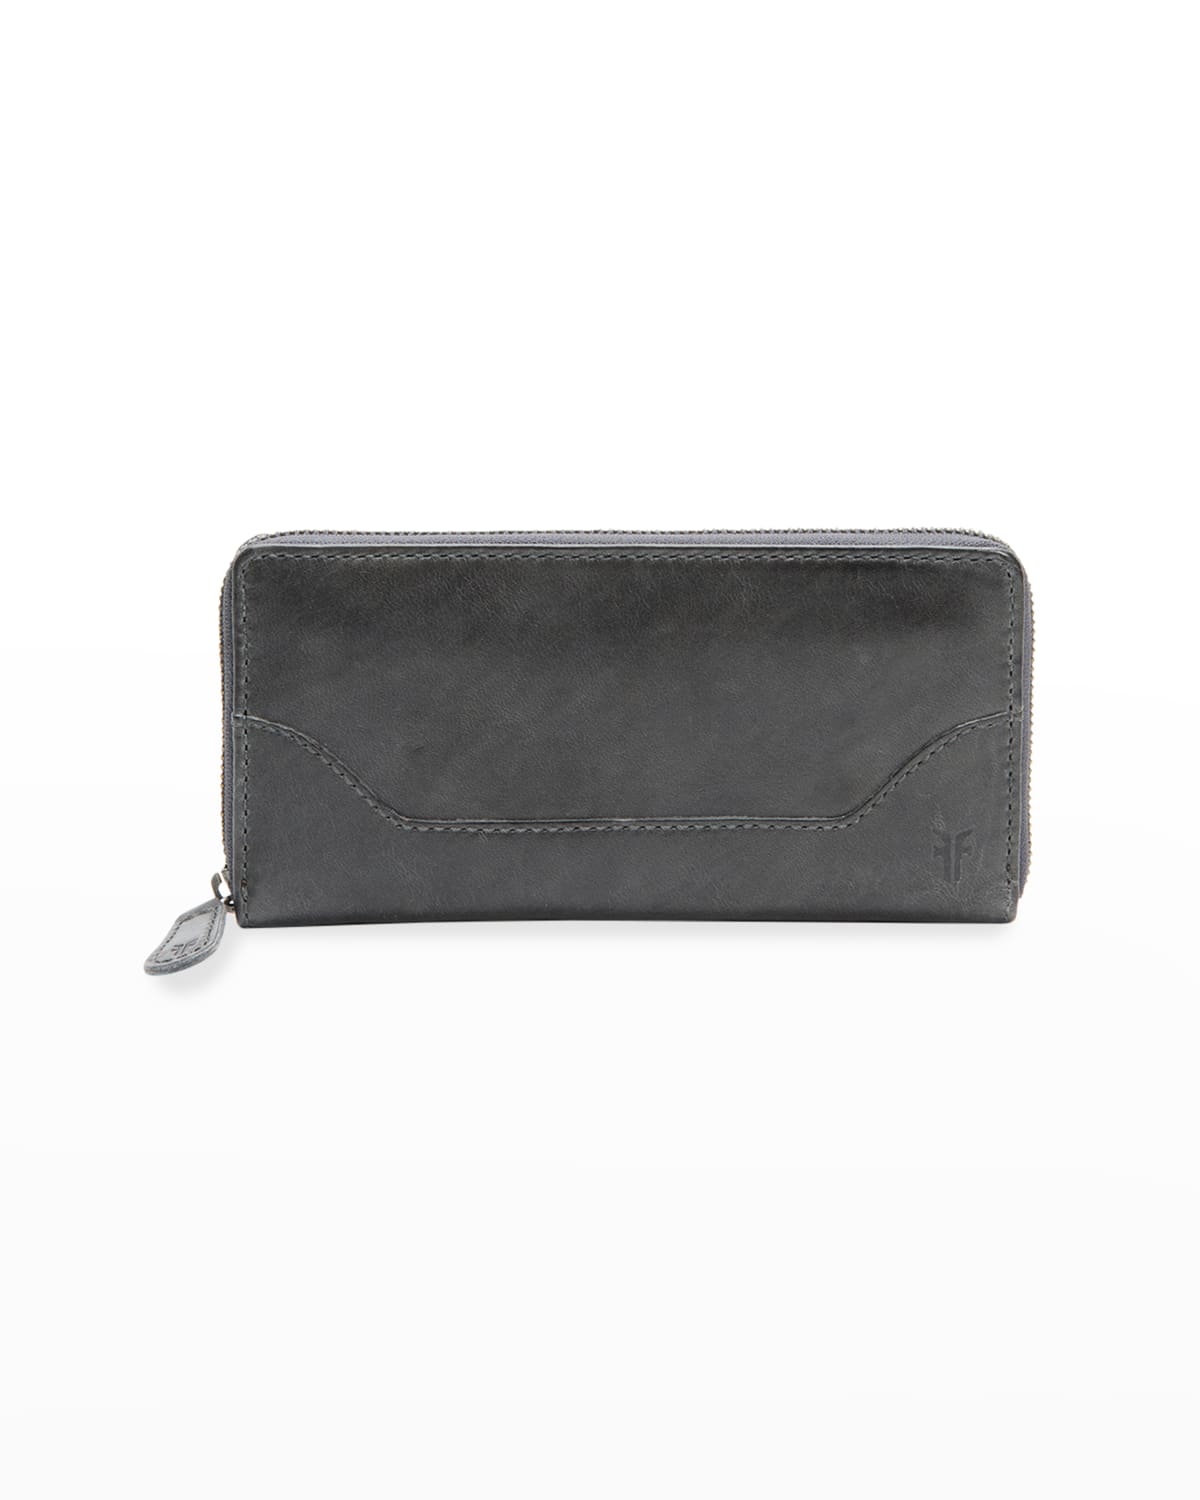 Melissa Antique Leather Zip Wallet